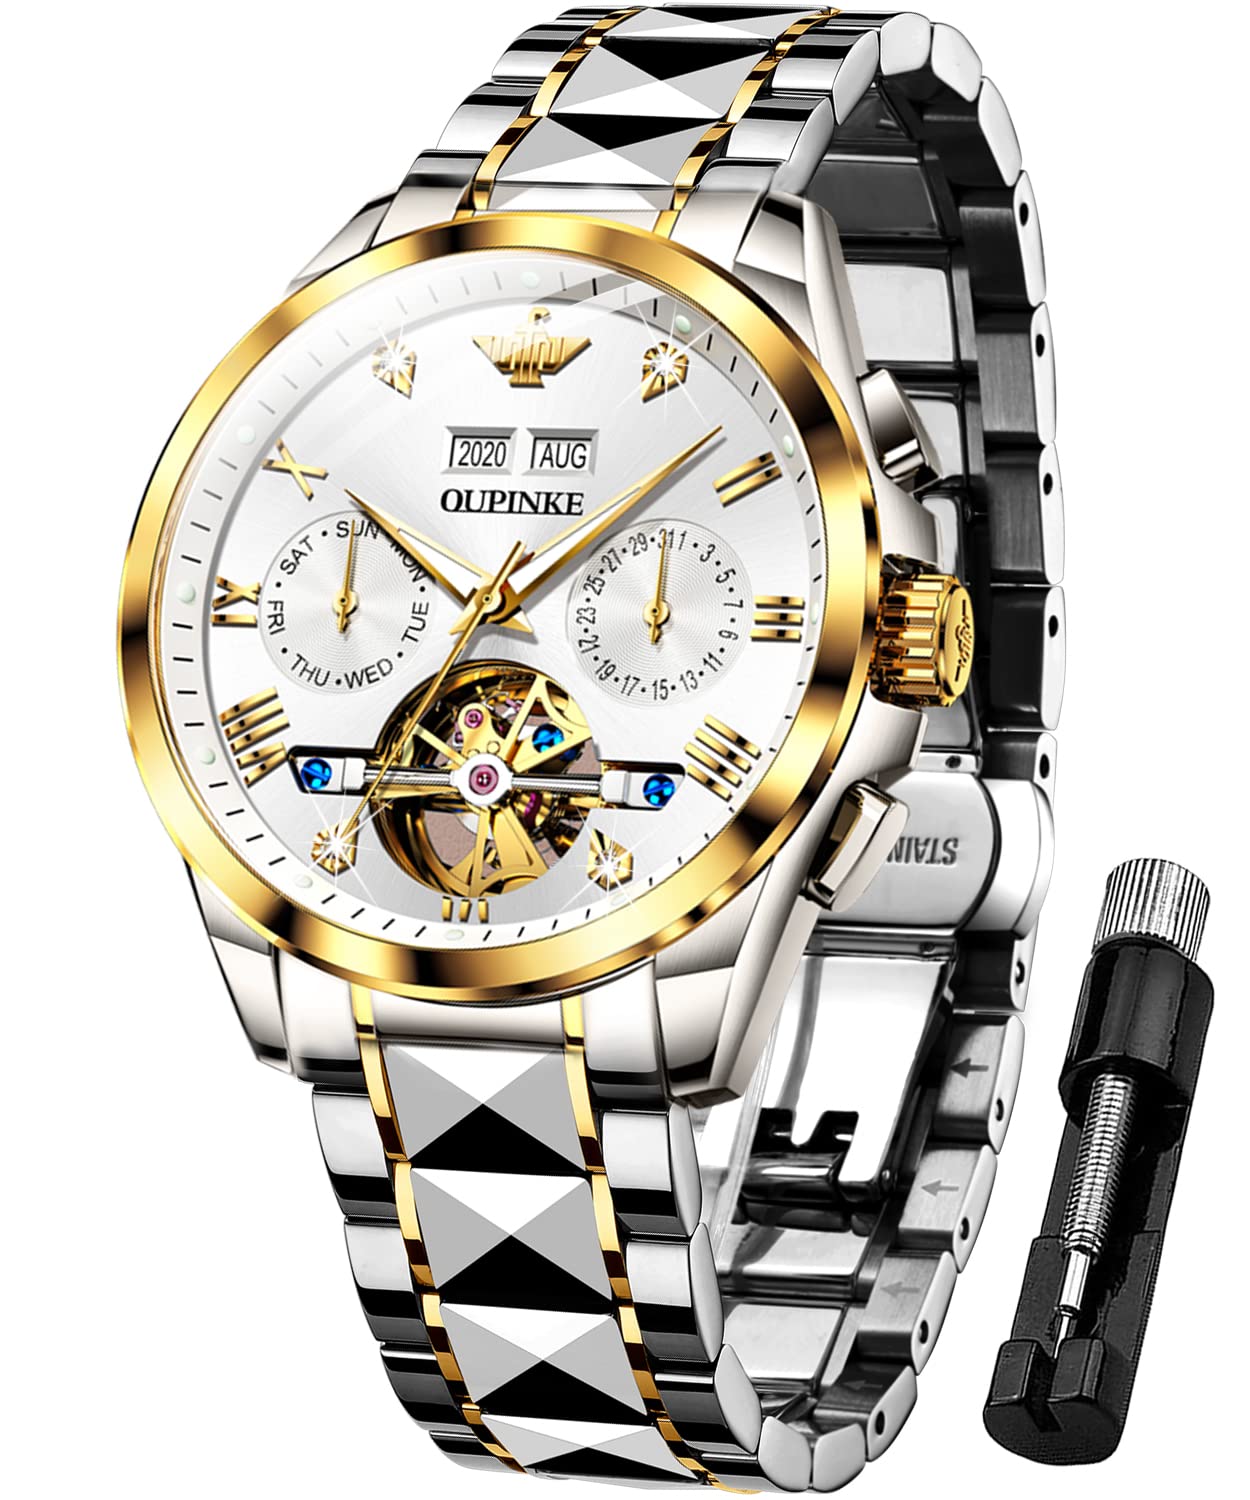 OUPINKE Mens Watches Automatic Skeleton Tourbillon Self Winding Luxury Sapphire Crystal Business Dress Wristwatch